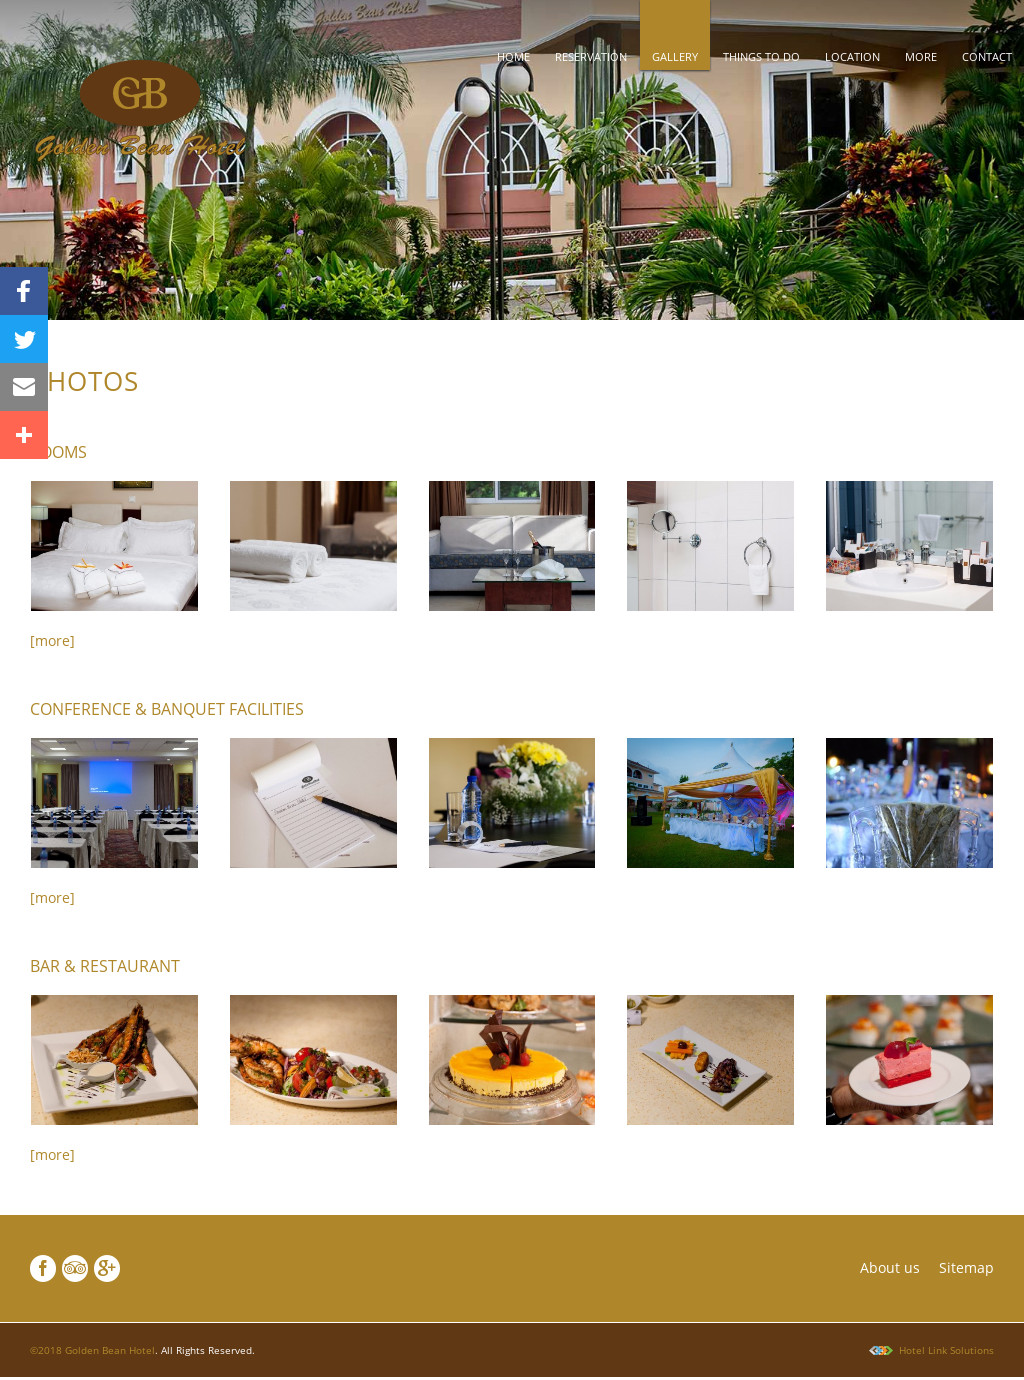 Golden Bean Hotel | Photo Gallery | Hotels | Web design | Websites | booking engine | digital marketing | Ghana | Togo | Benin